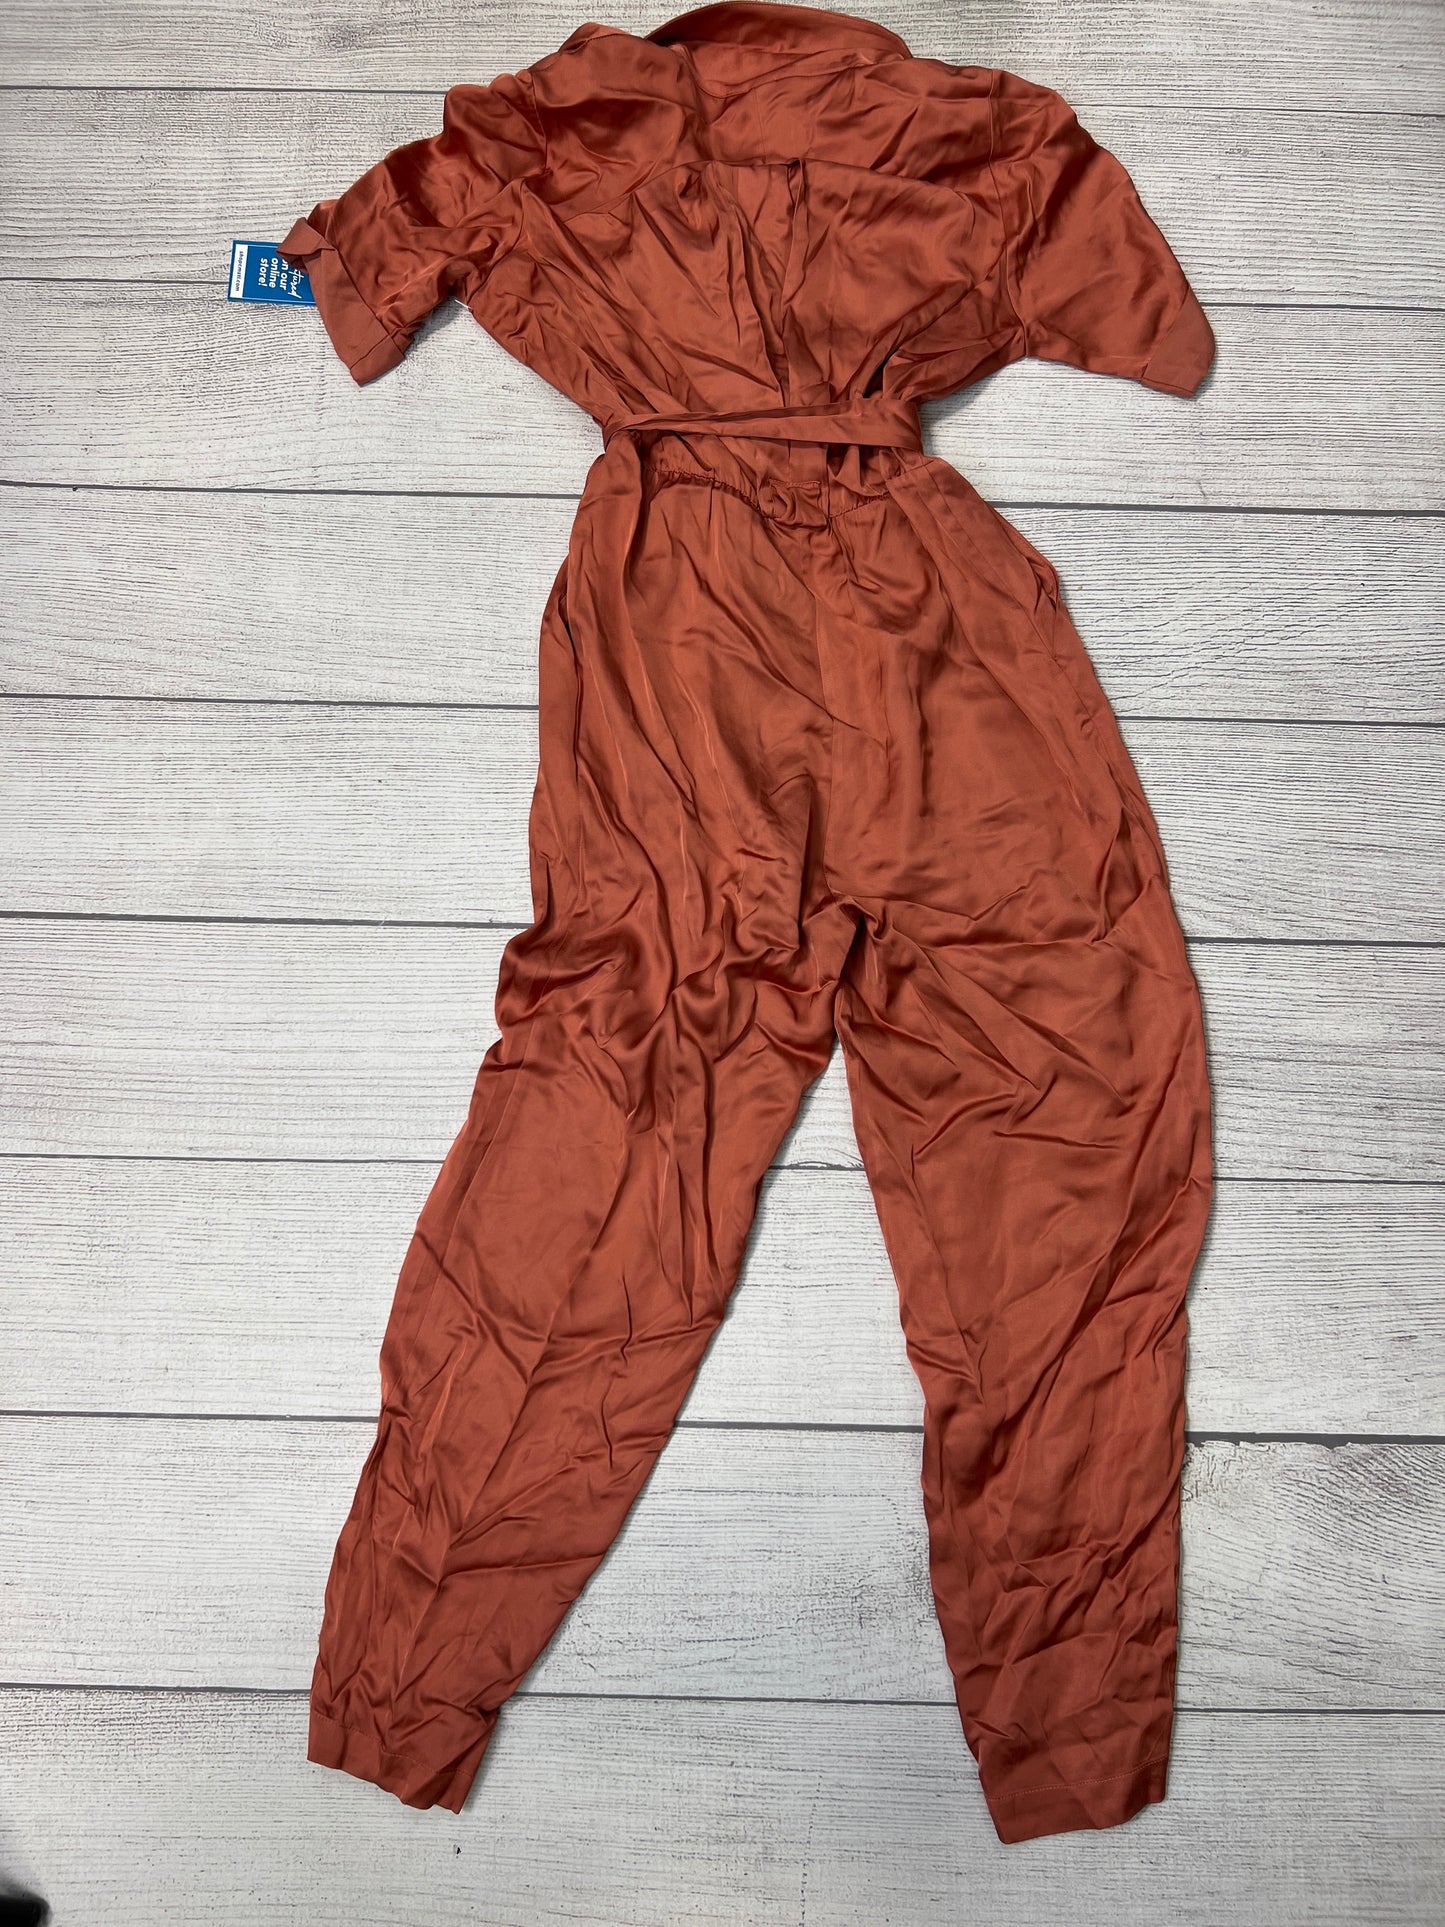 Orange Jumpsuit by Anthropologie, Size S